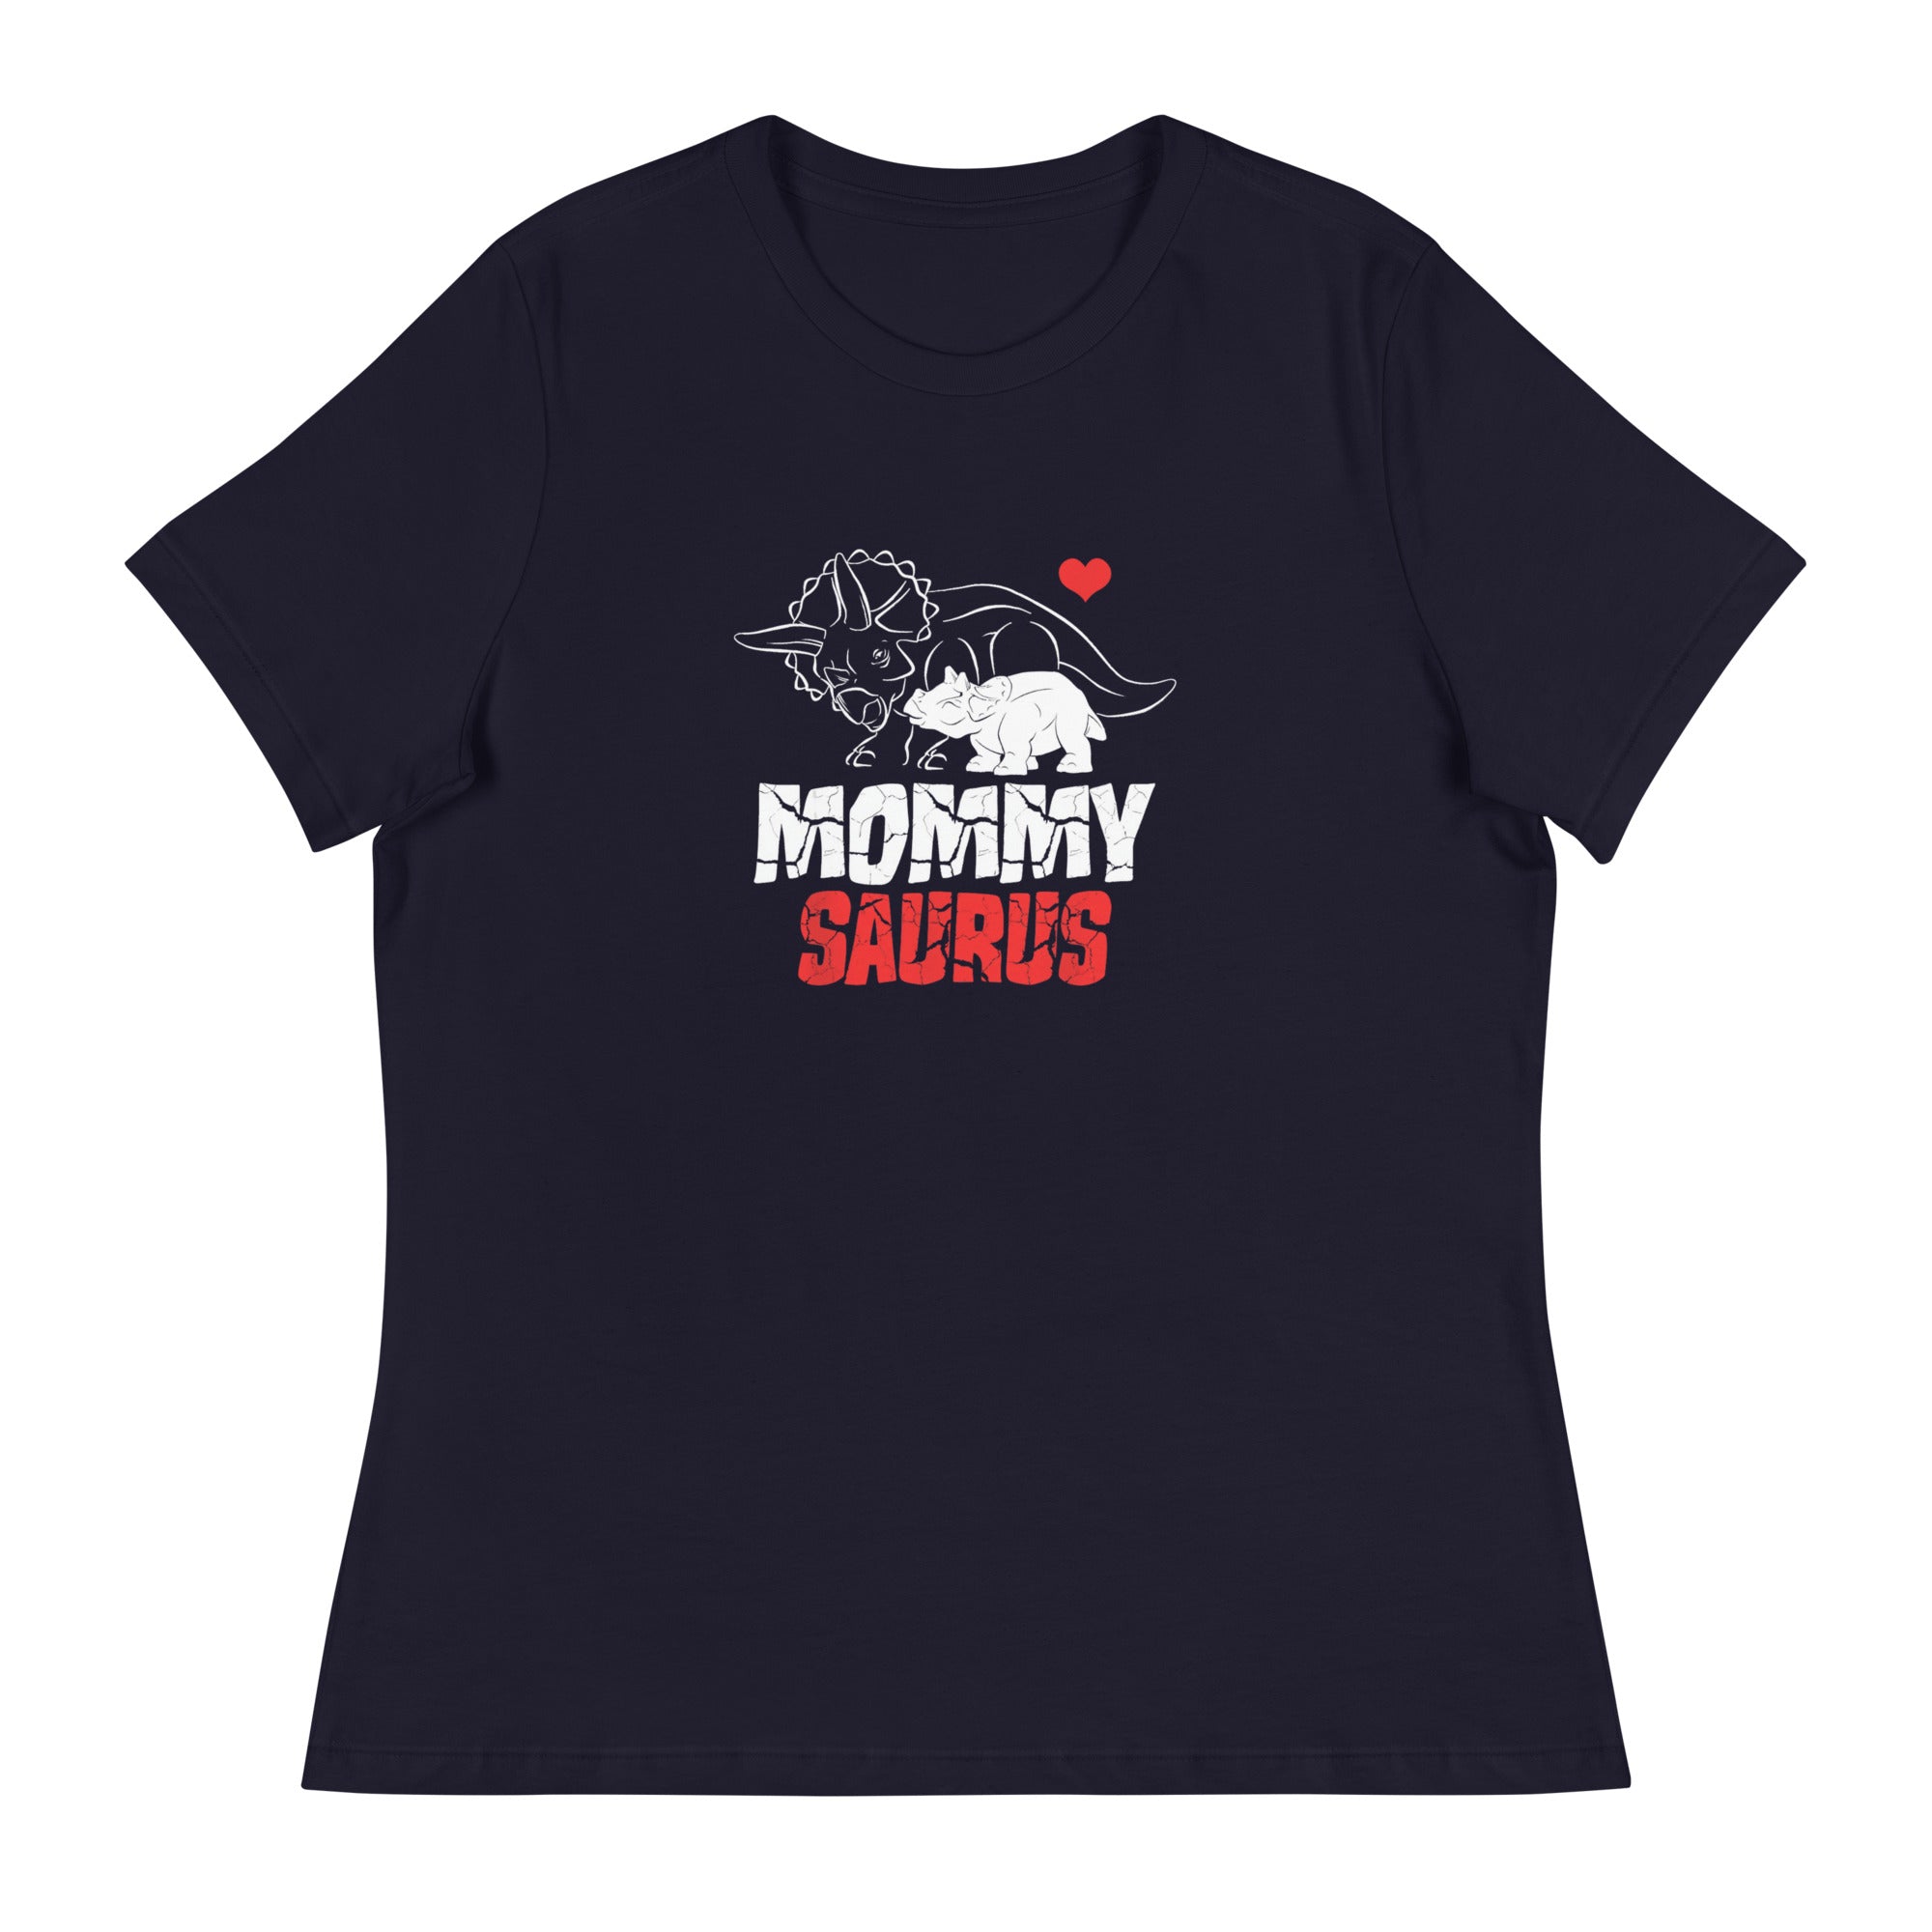 Mommysaurus - Women's Dinosaur T-Shirt